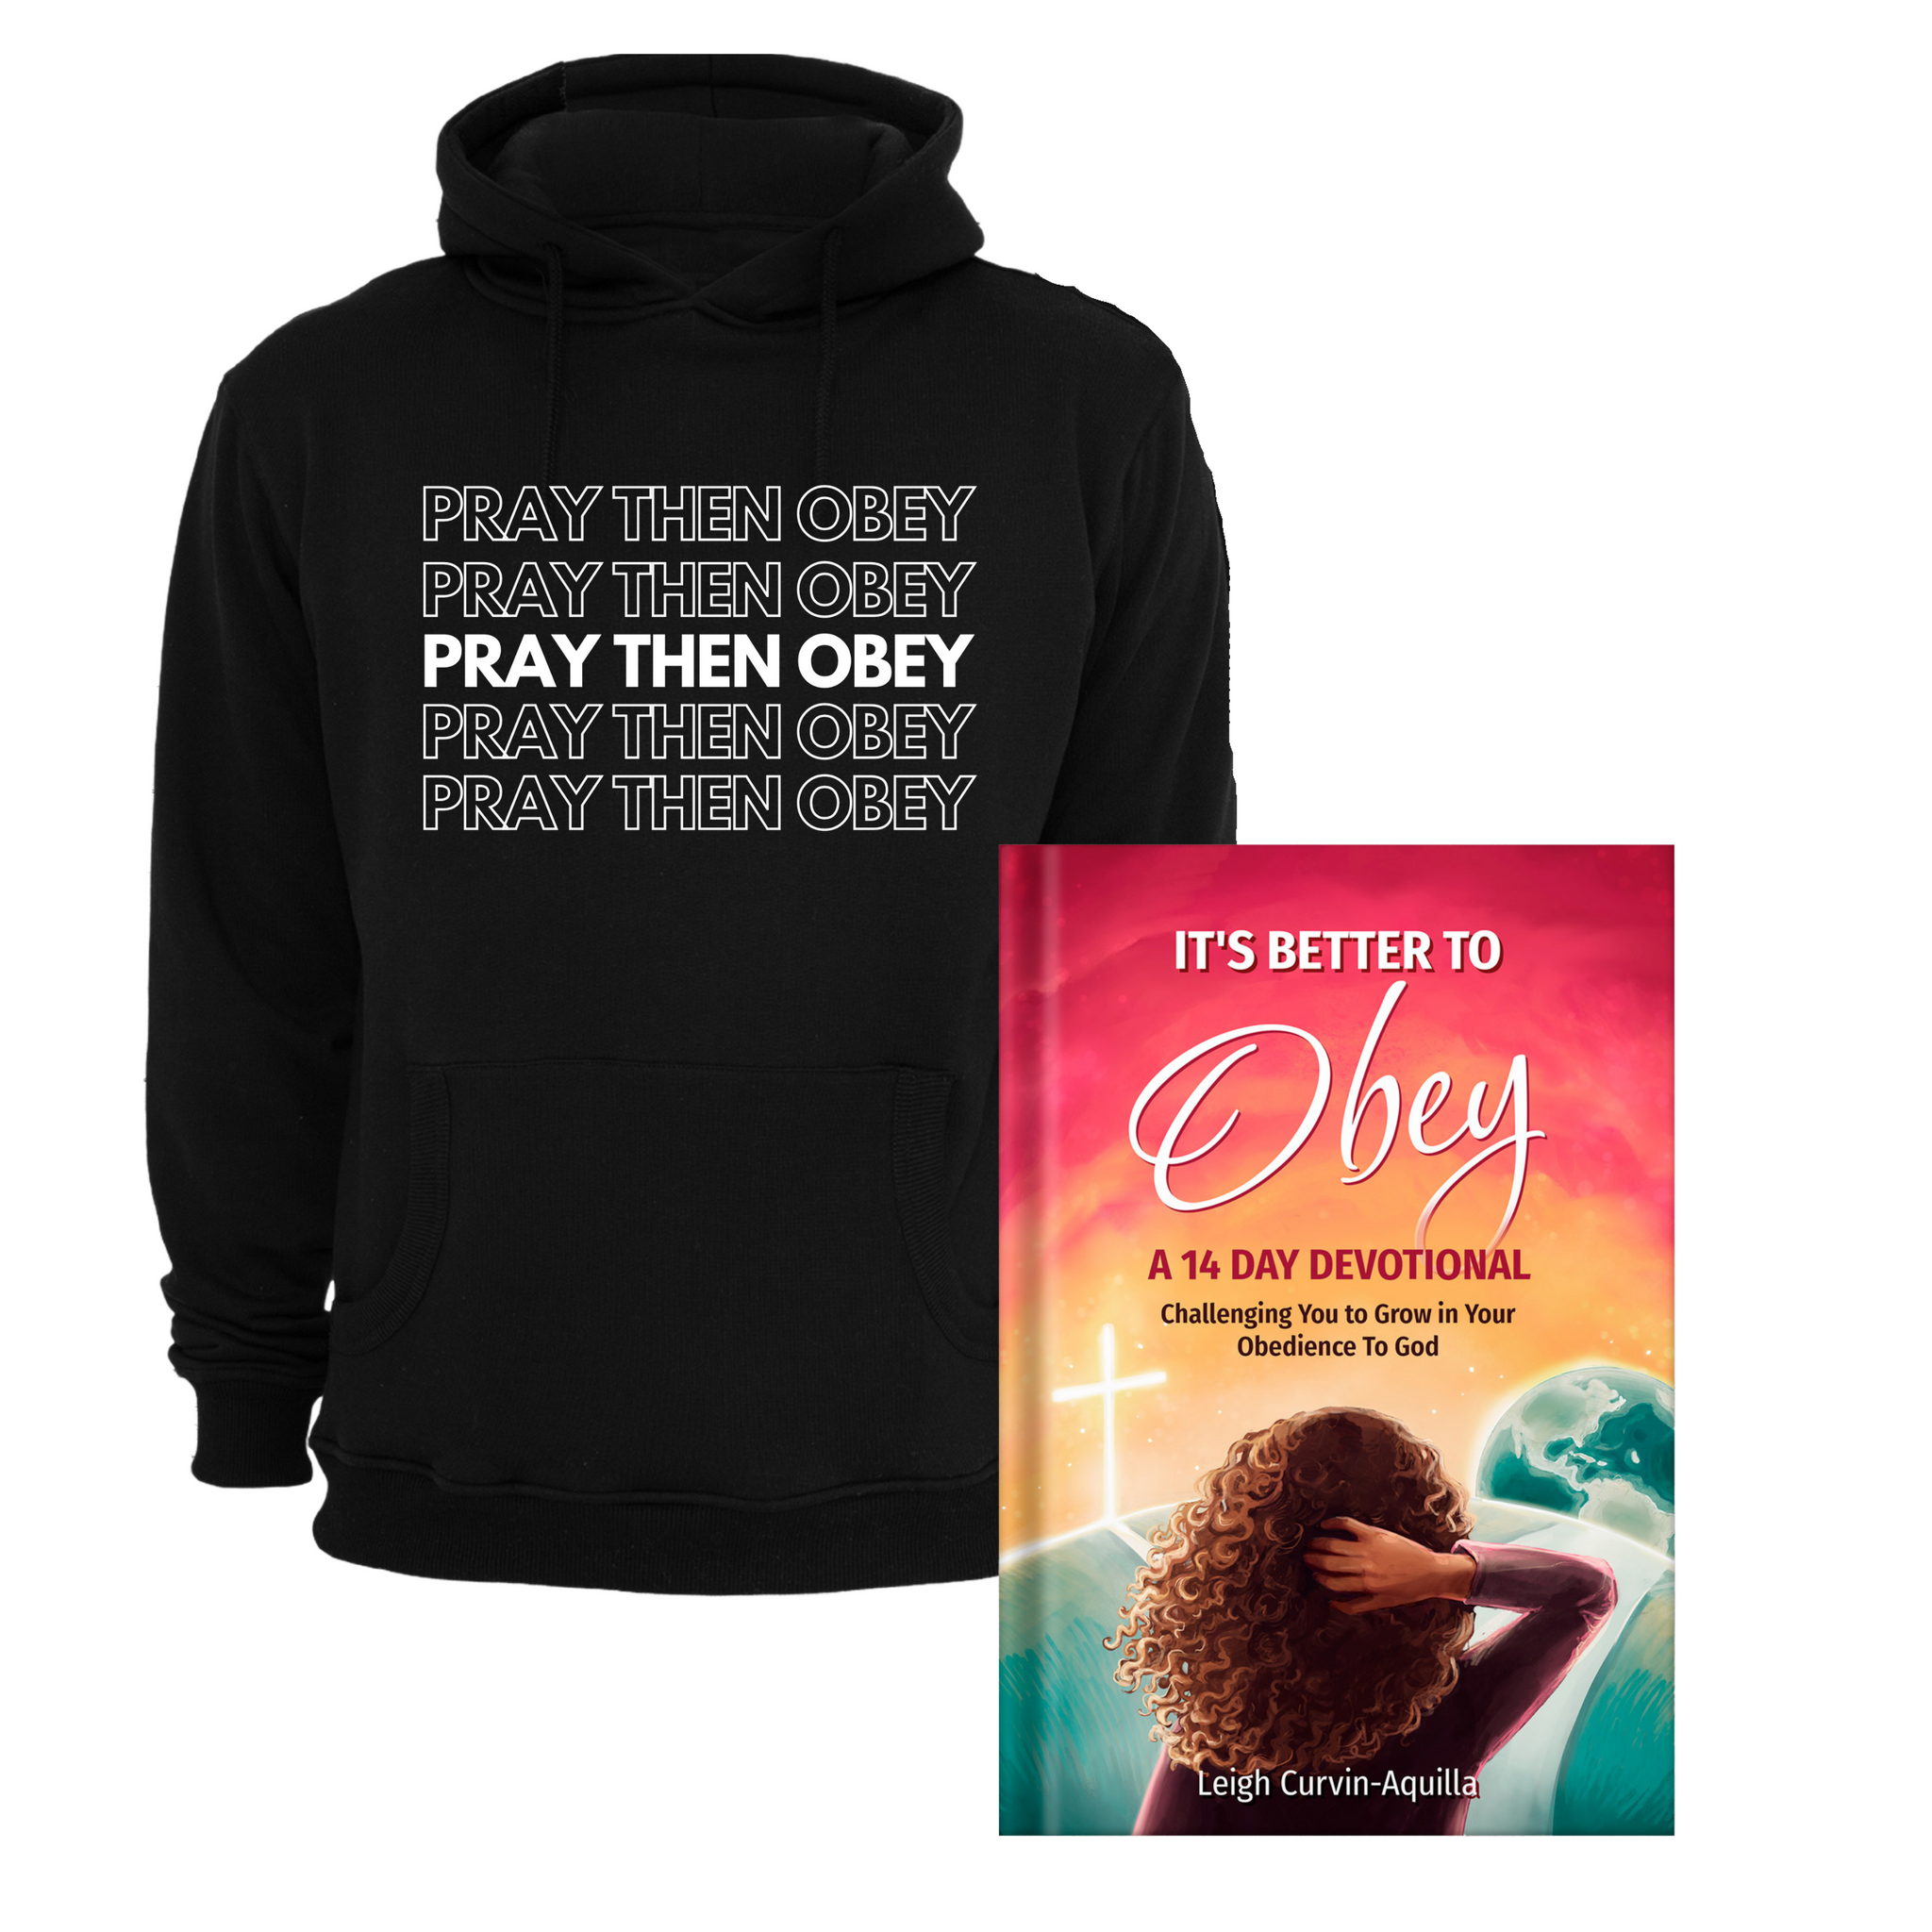 Bundle: "It's Better To Obey" Devotional + Hoodie (Pray Then Obey)